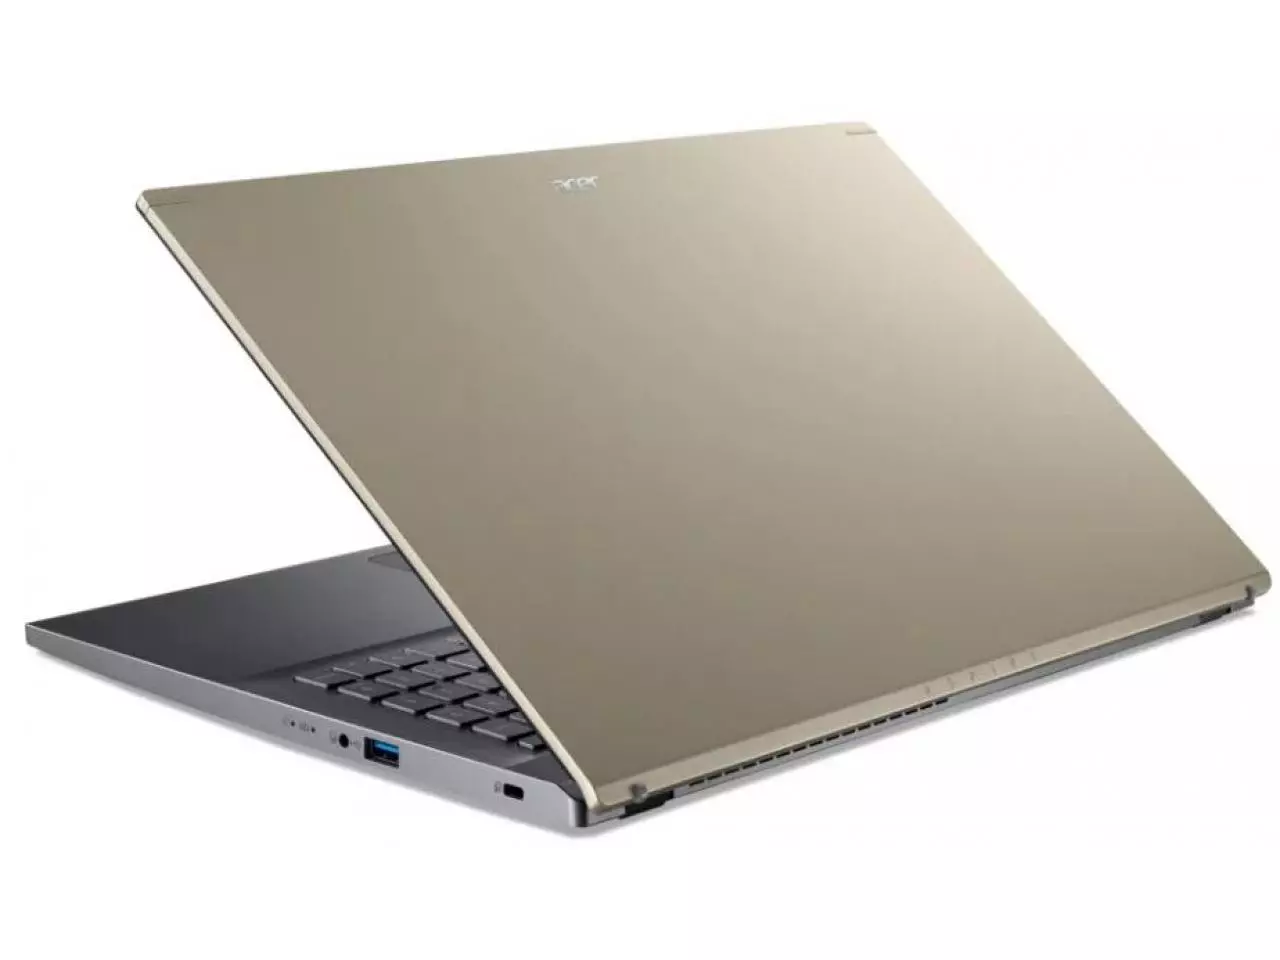 Tampa do notebook Acer Swift 3 na cor dourada